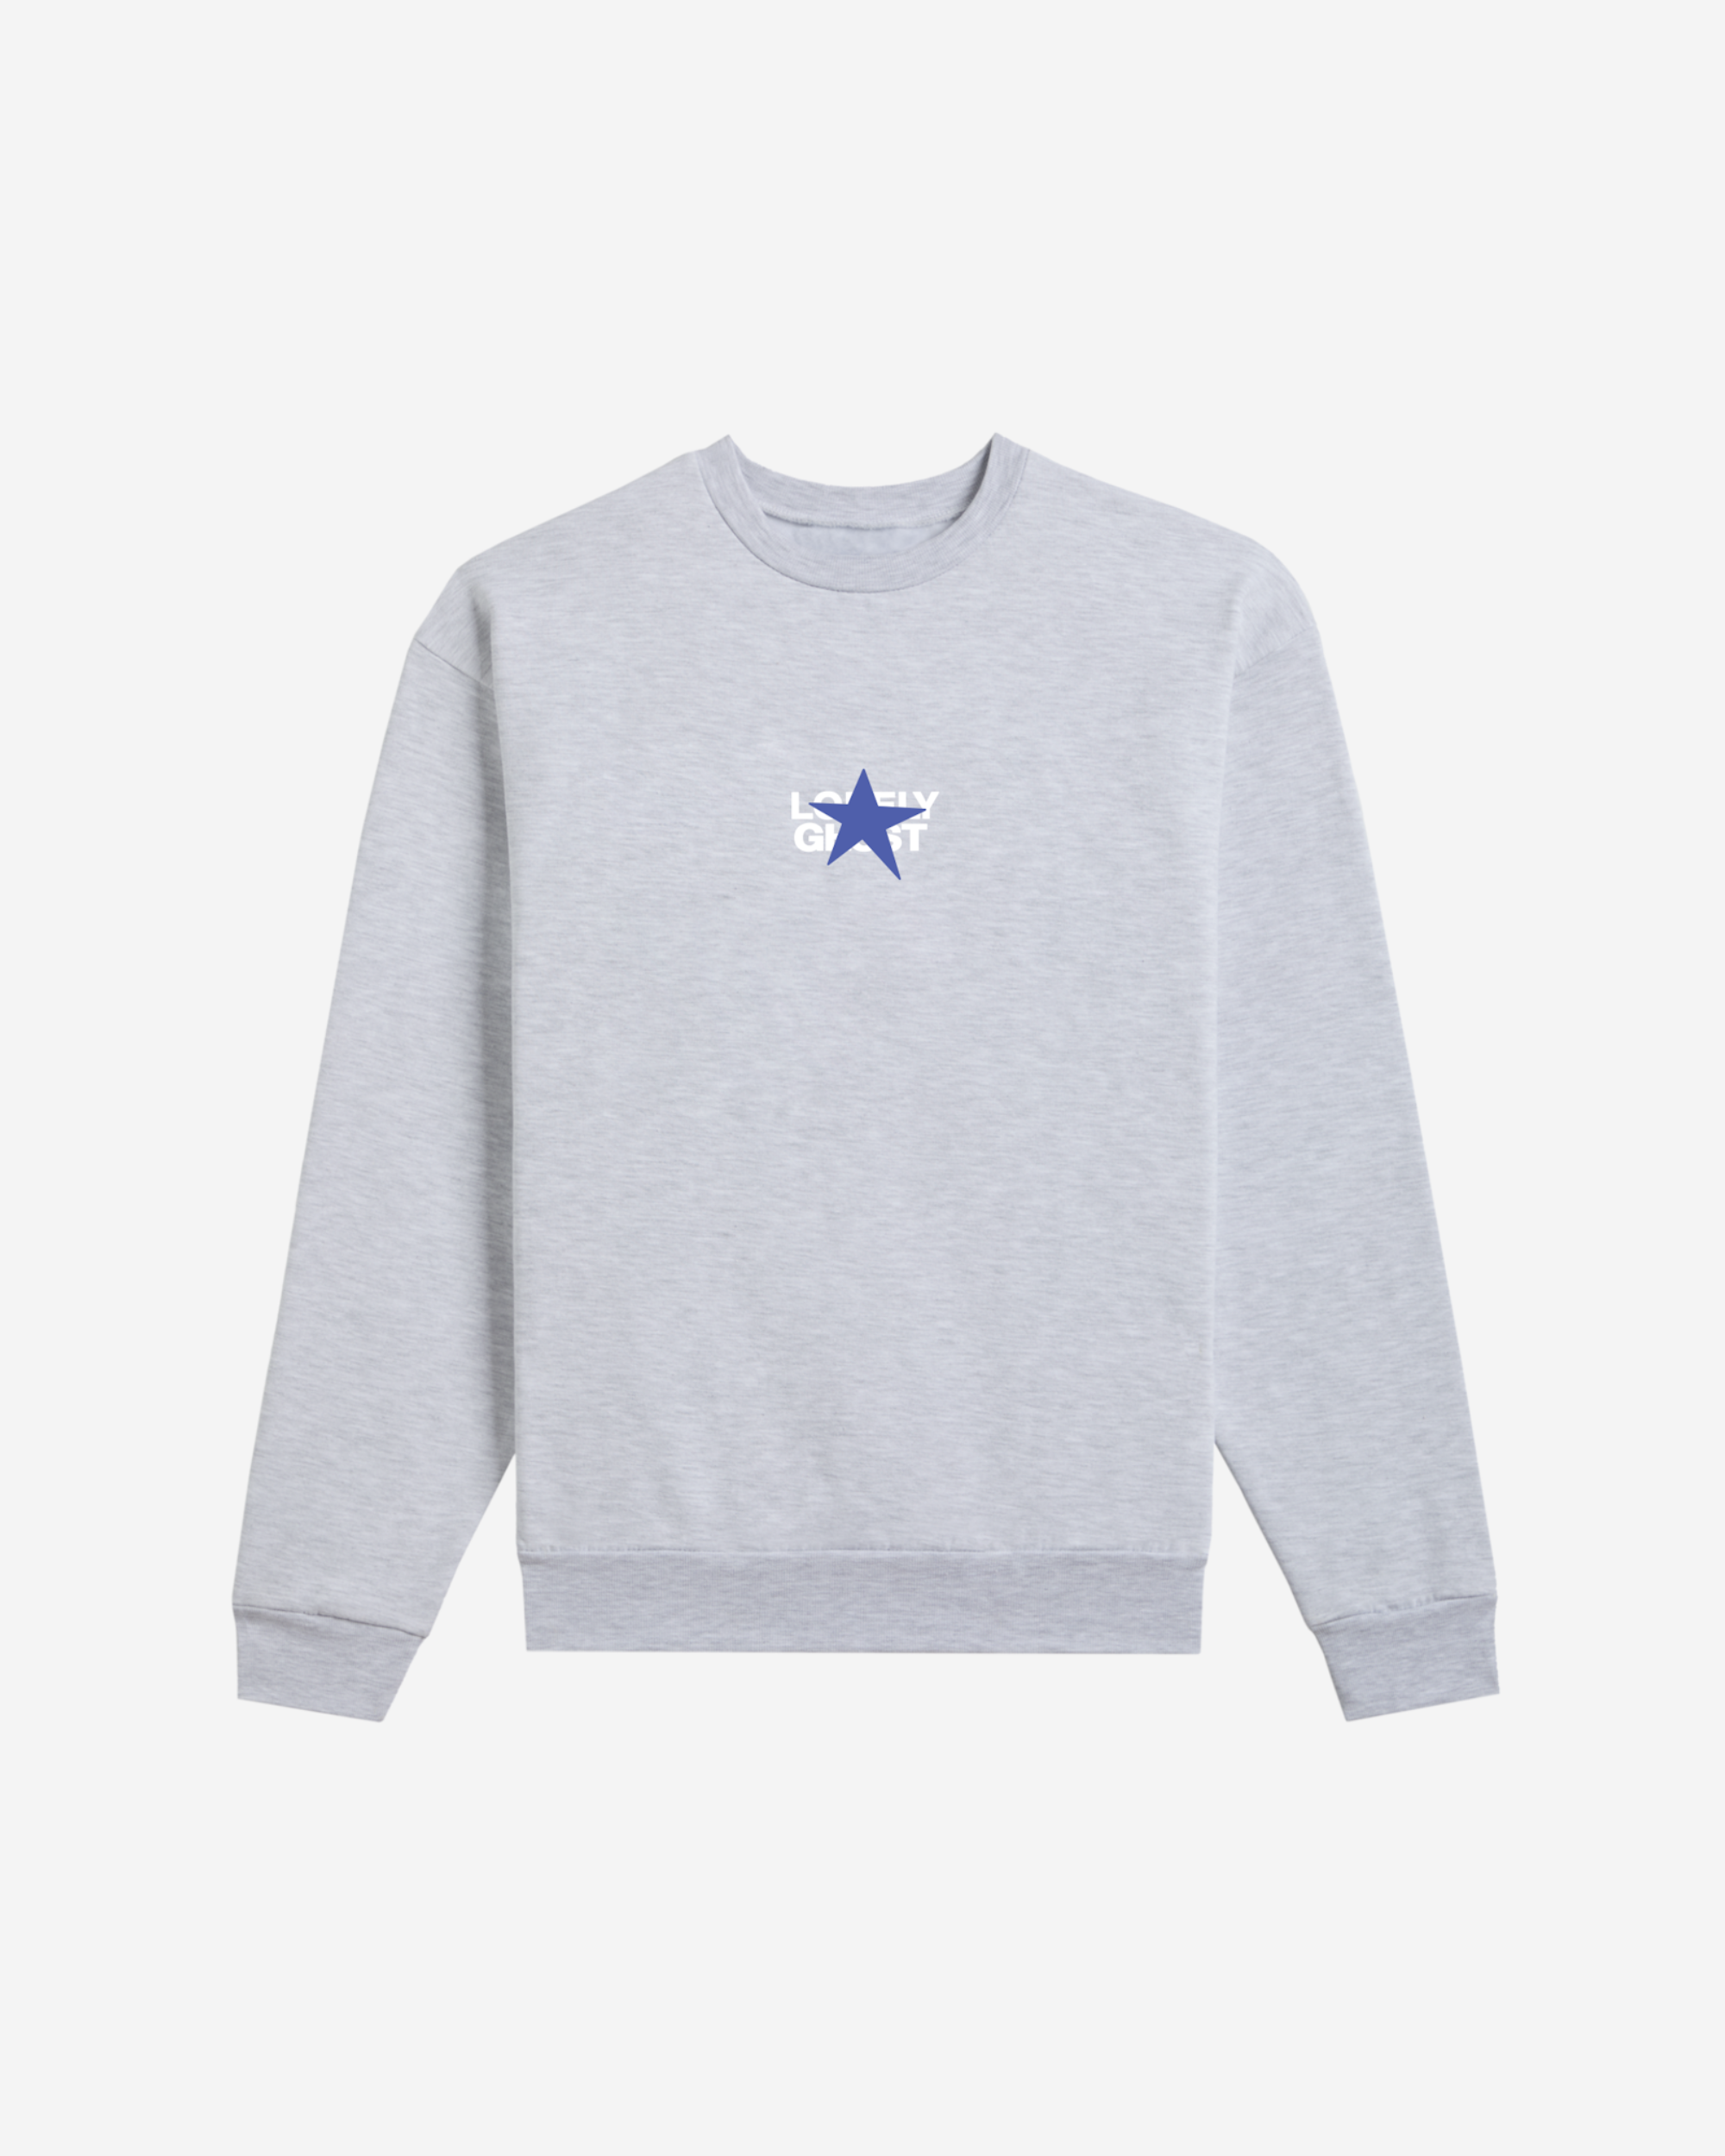 Lone Star Crewneck Sweater